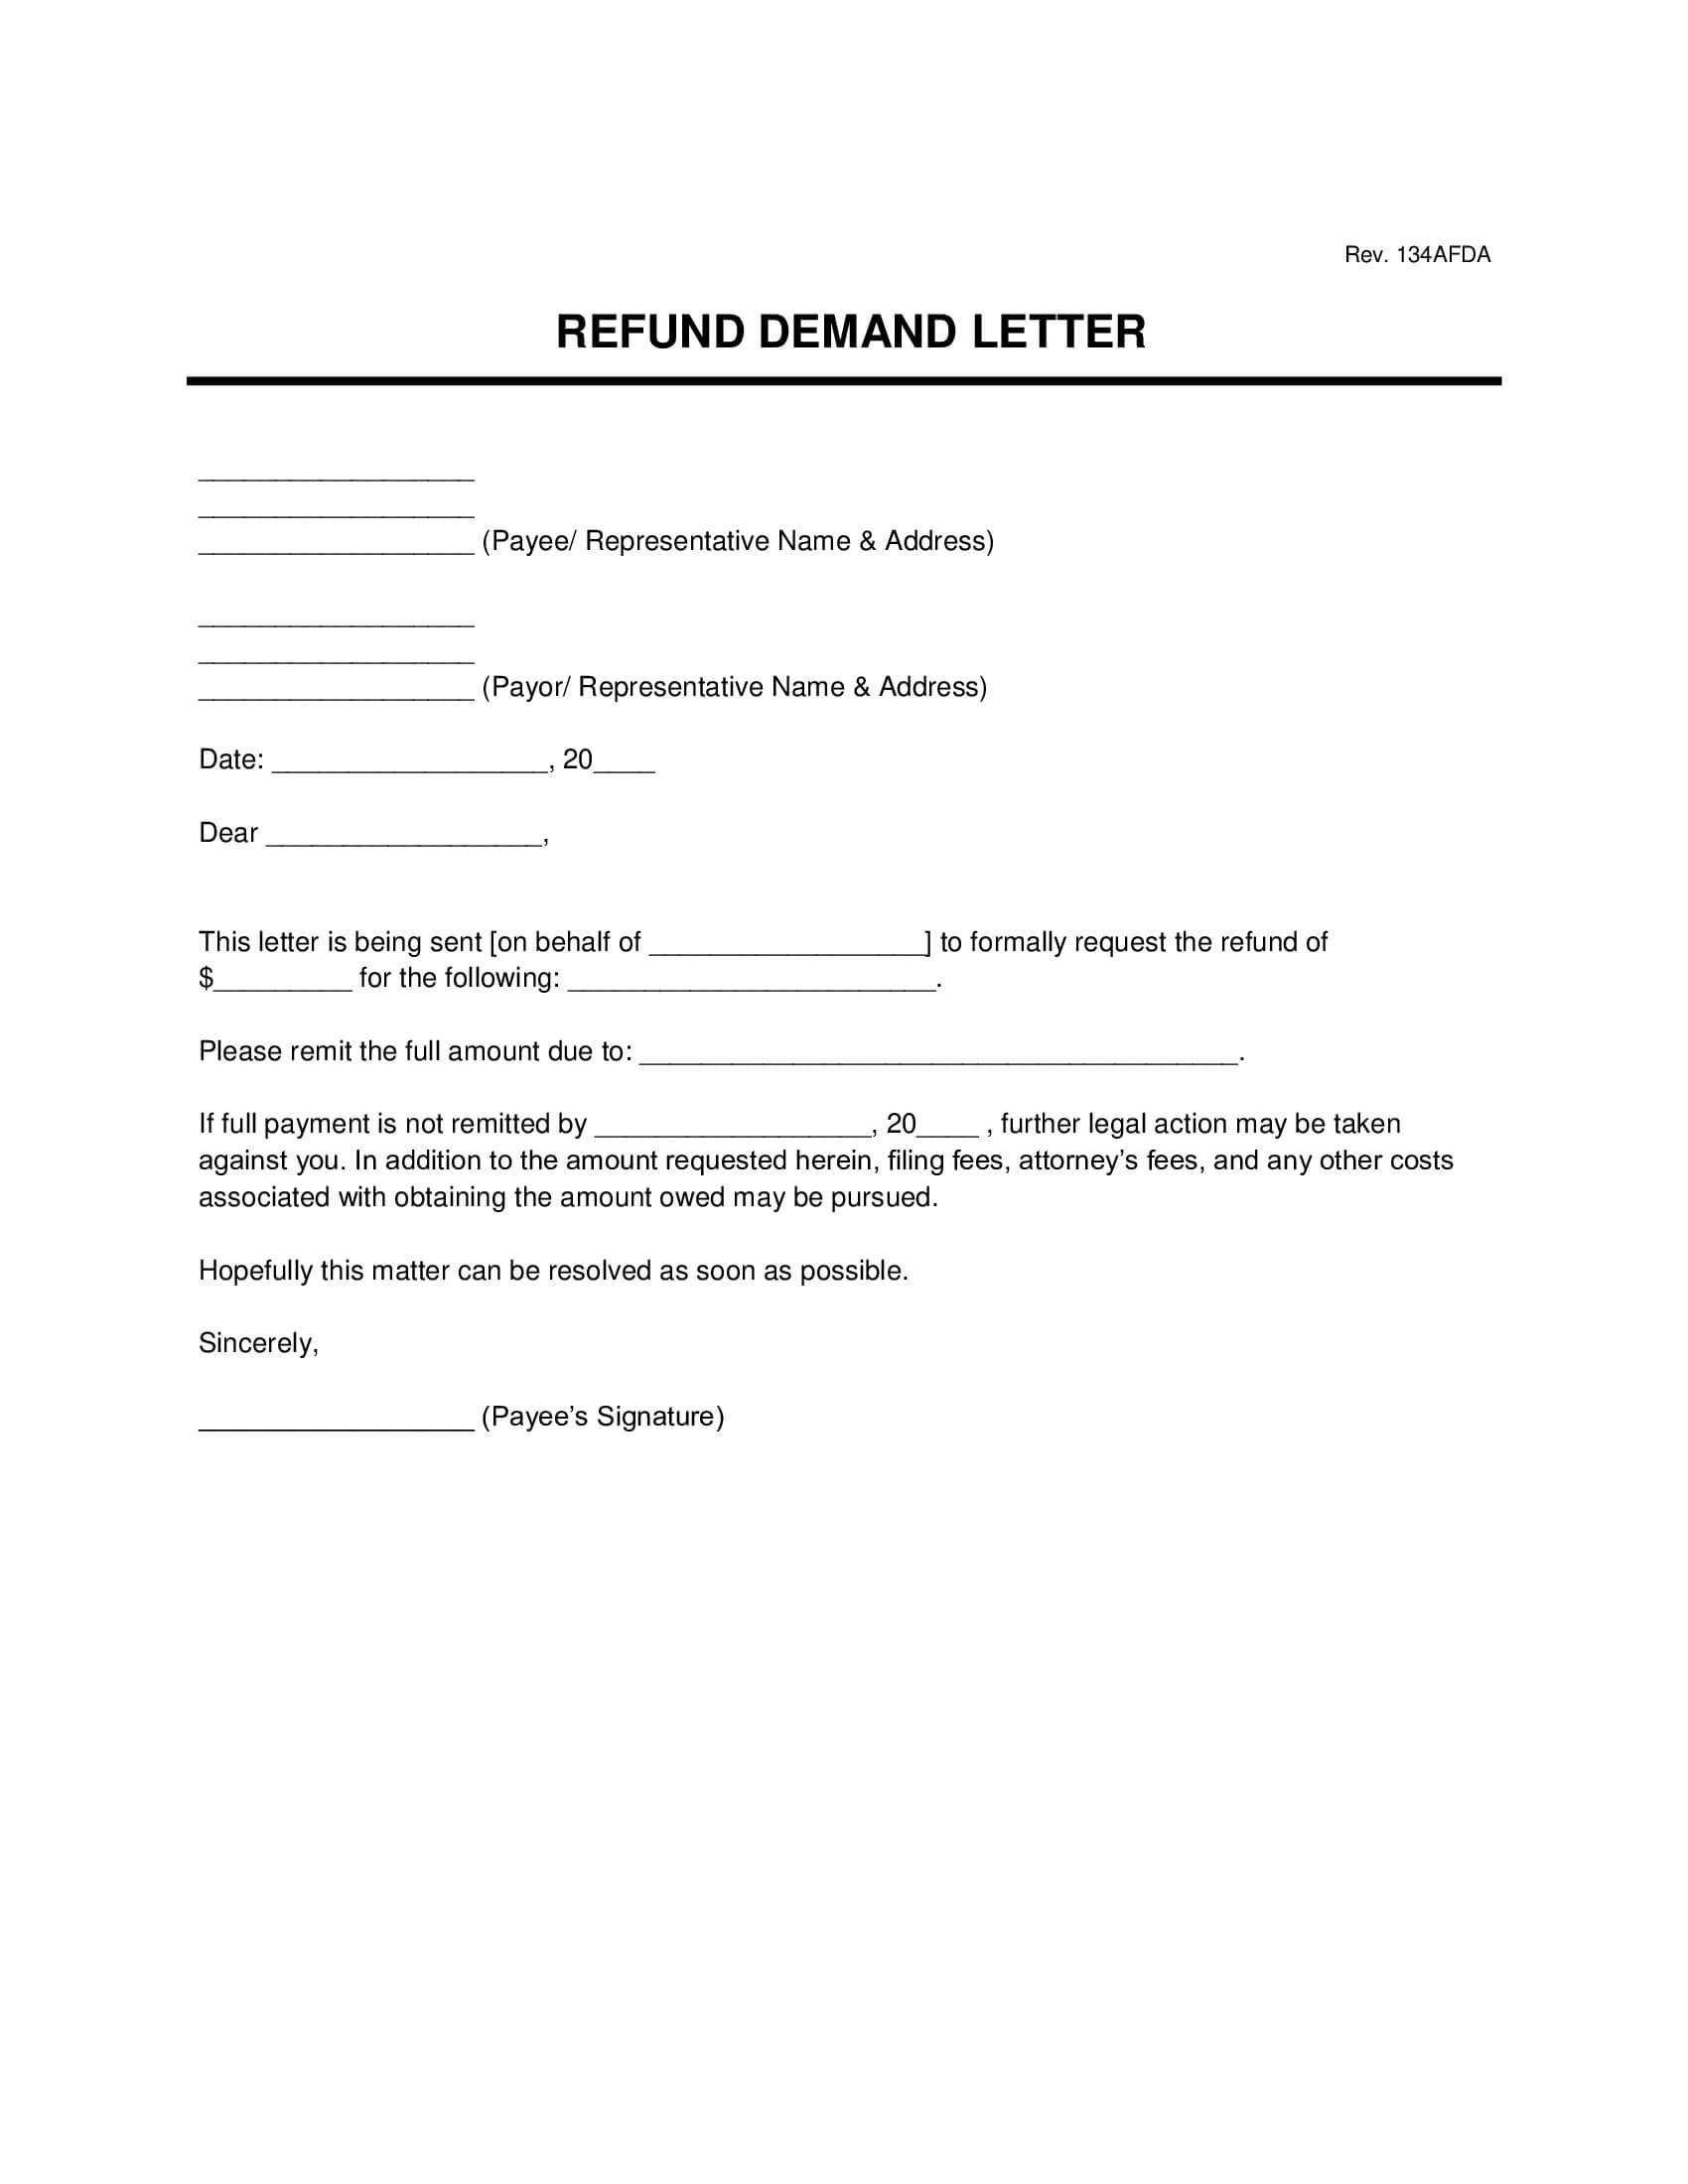 Refund Demand Letter Template